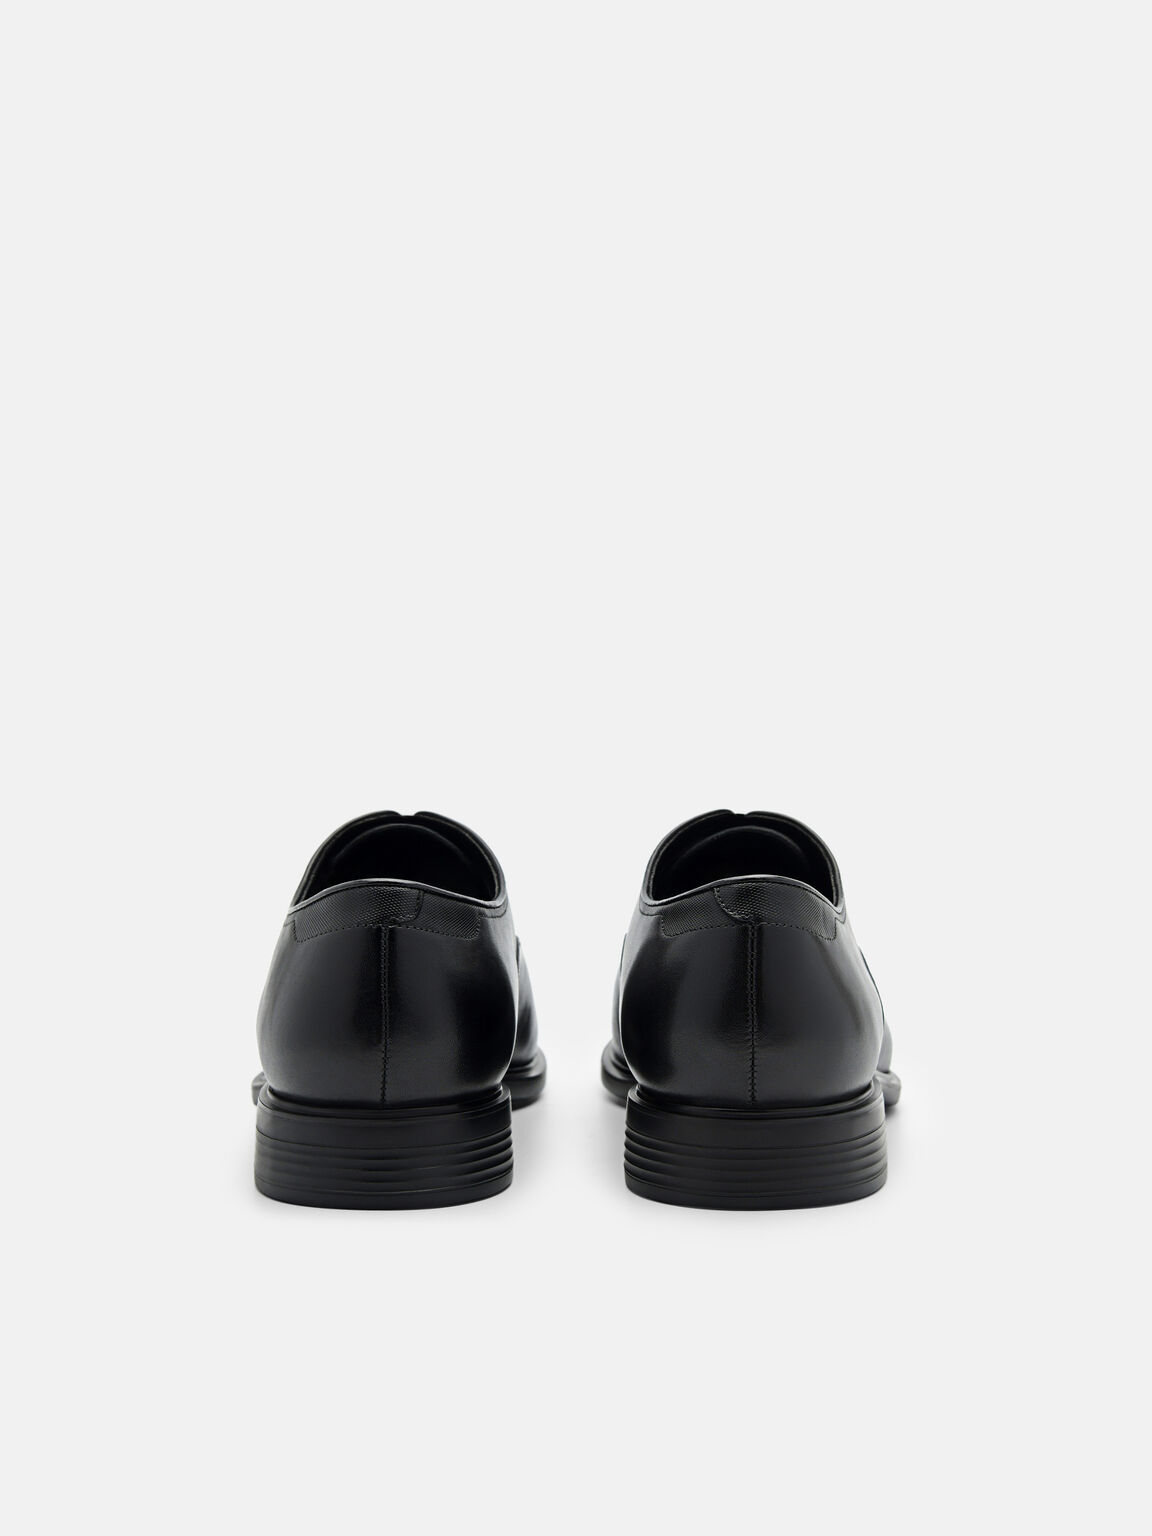 Leather Oxford Shoes, Black, hi-res